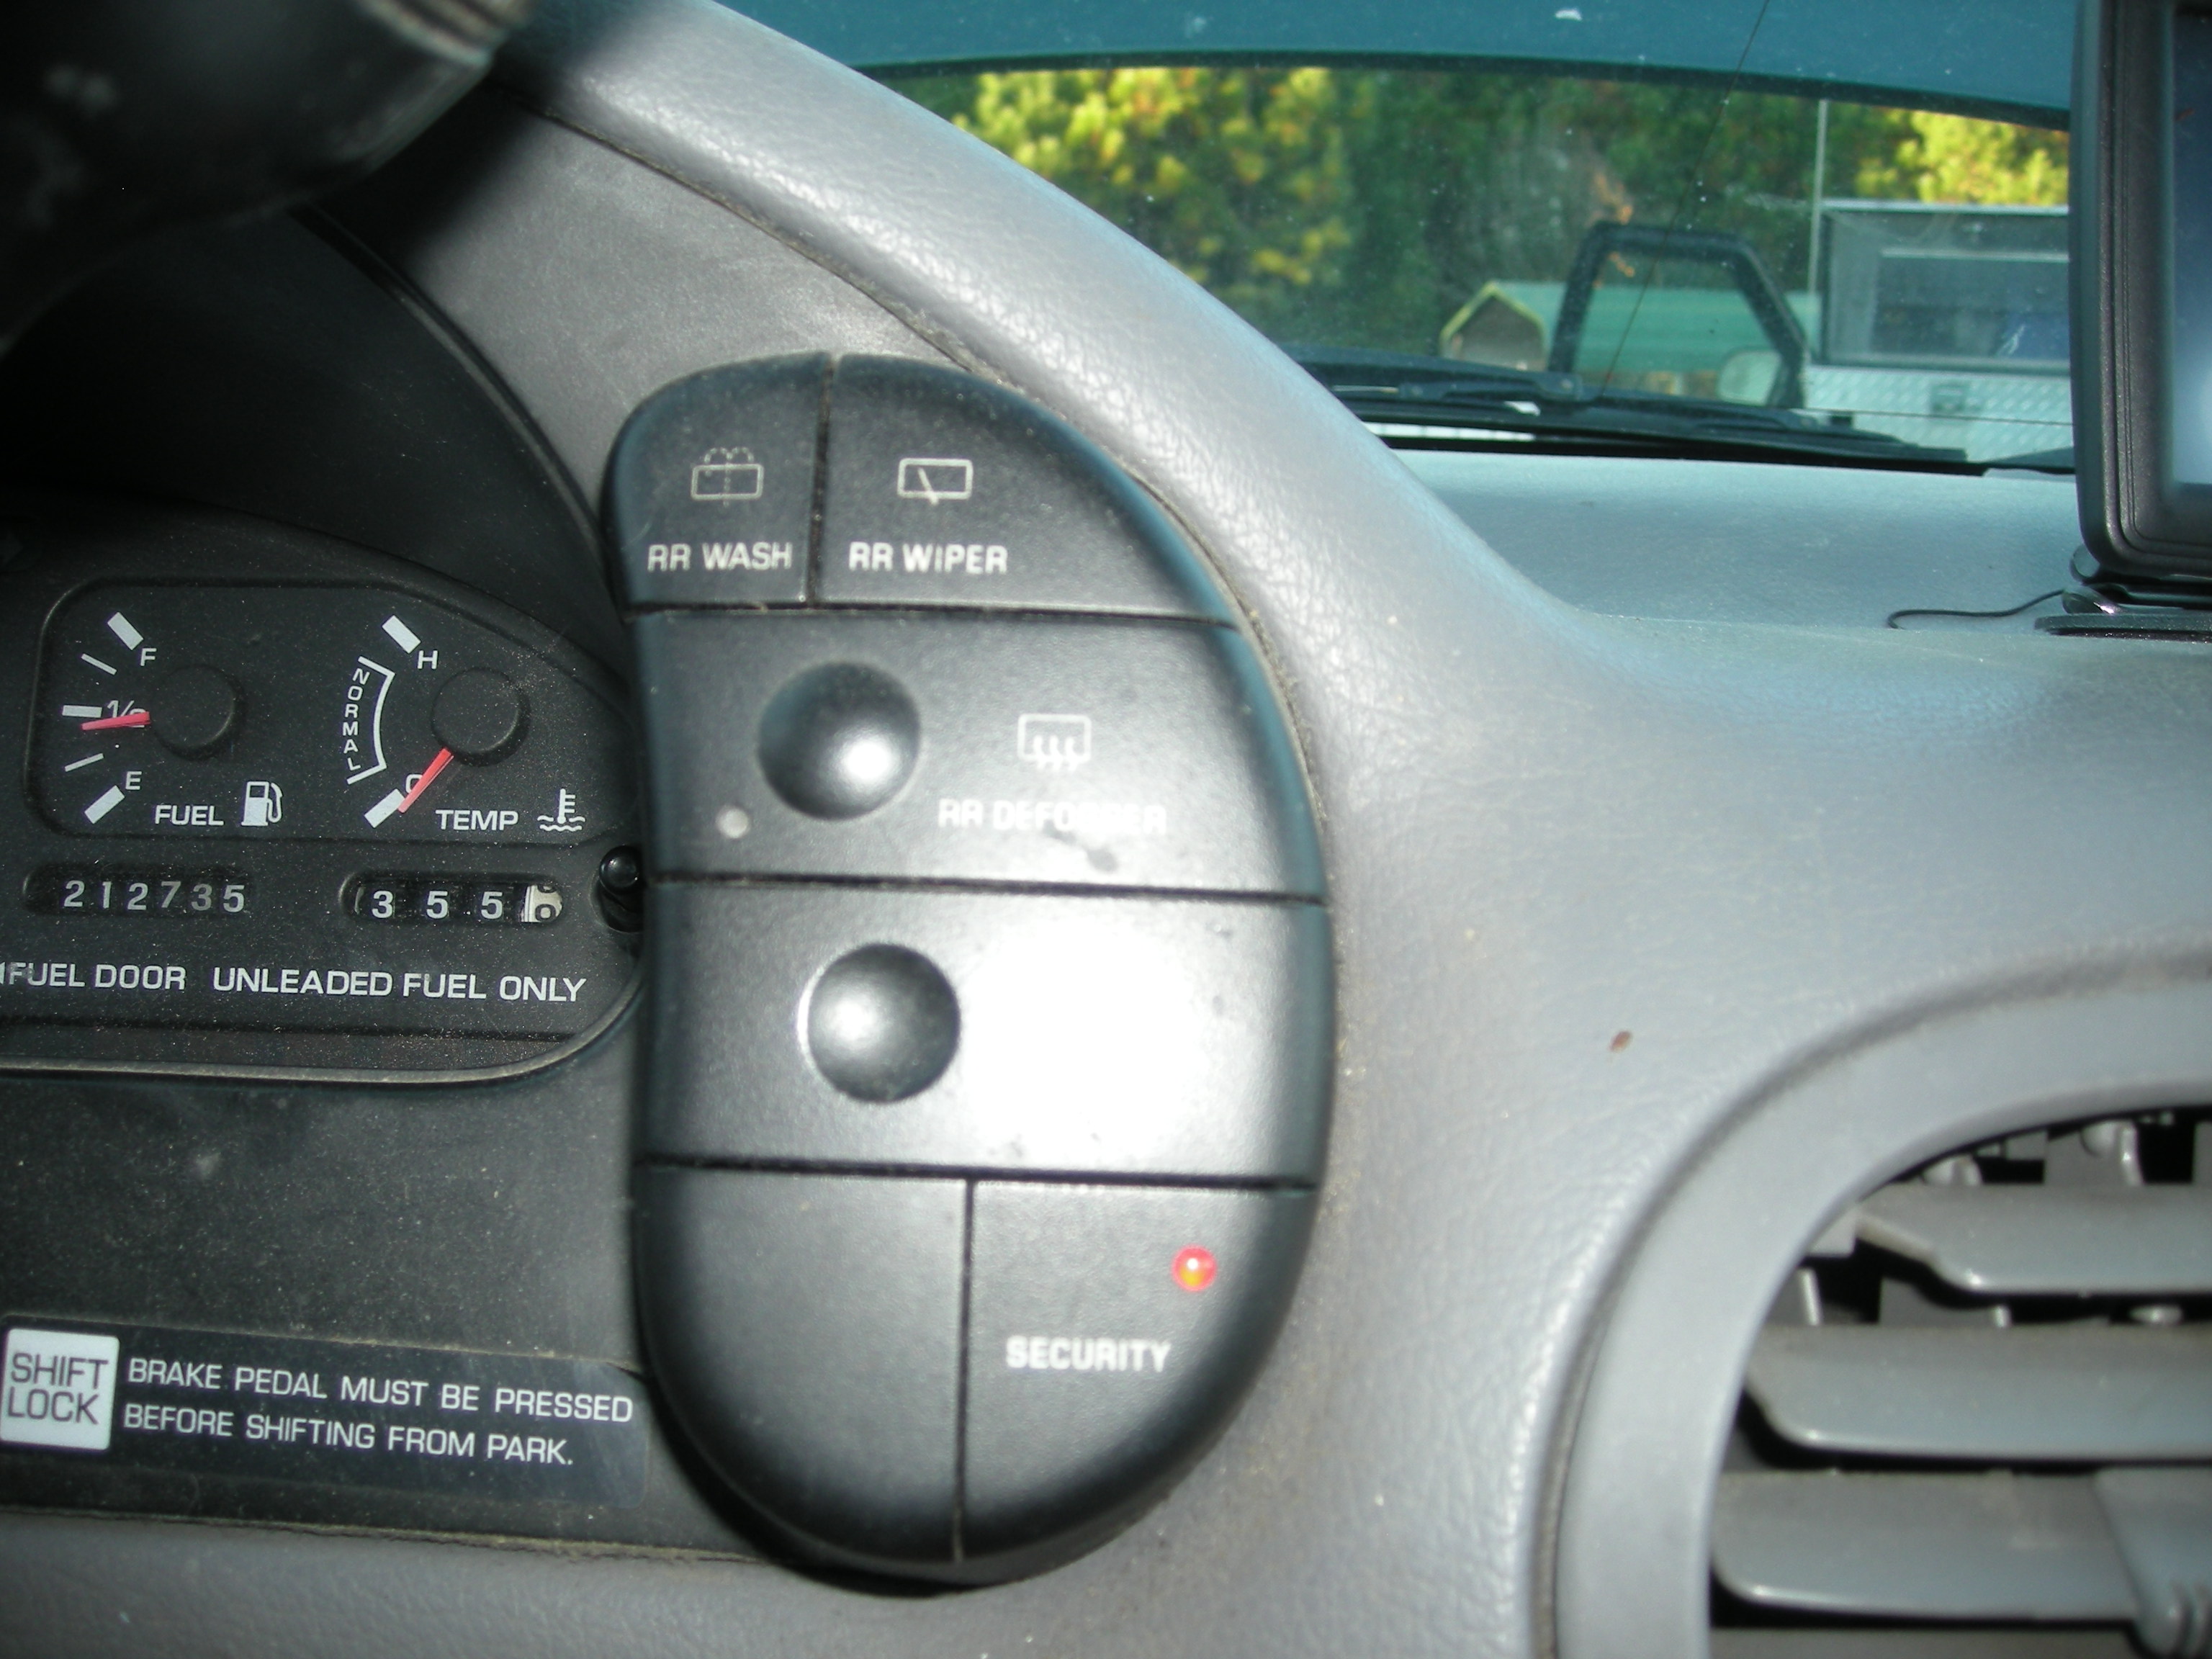 1997 Nissan quest alarm